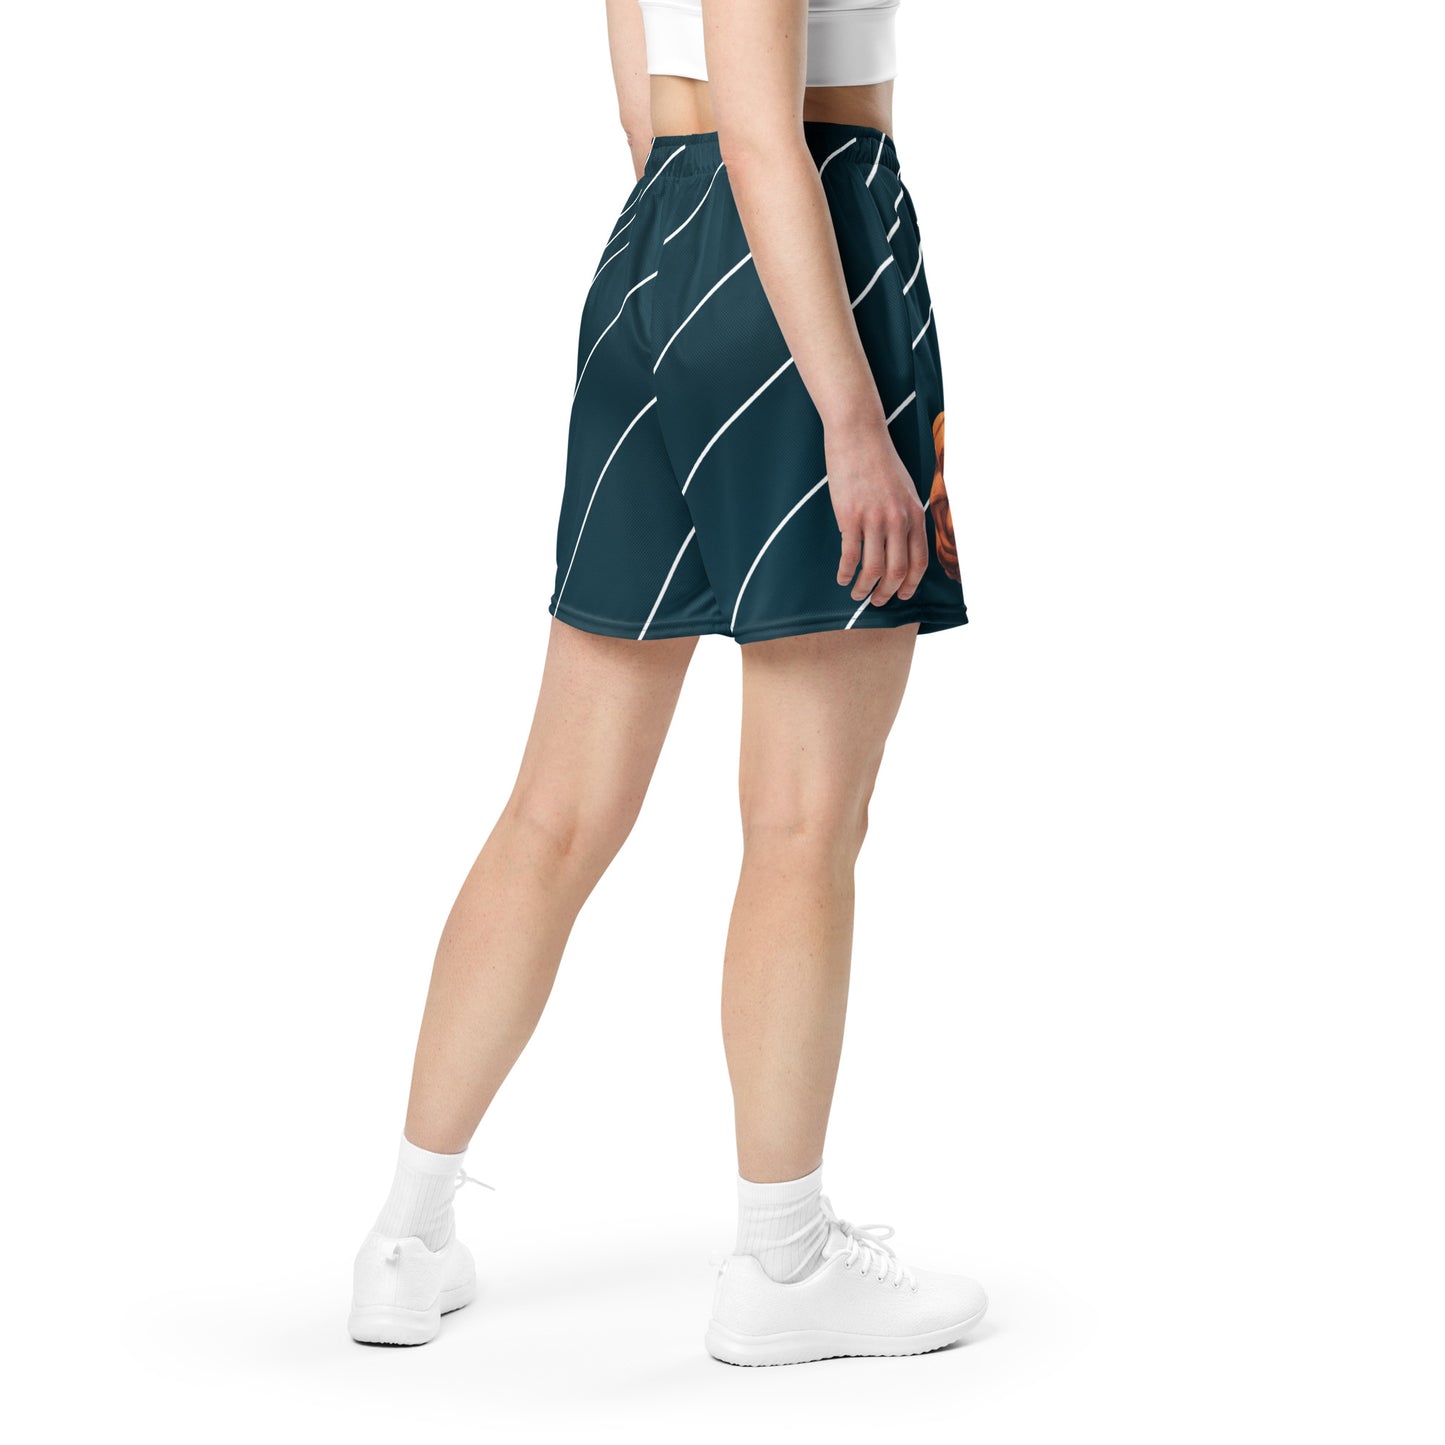 Pantalones cortos de malla unisex con figura muscular de anime 